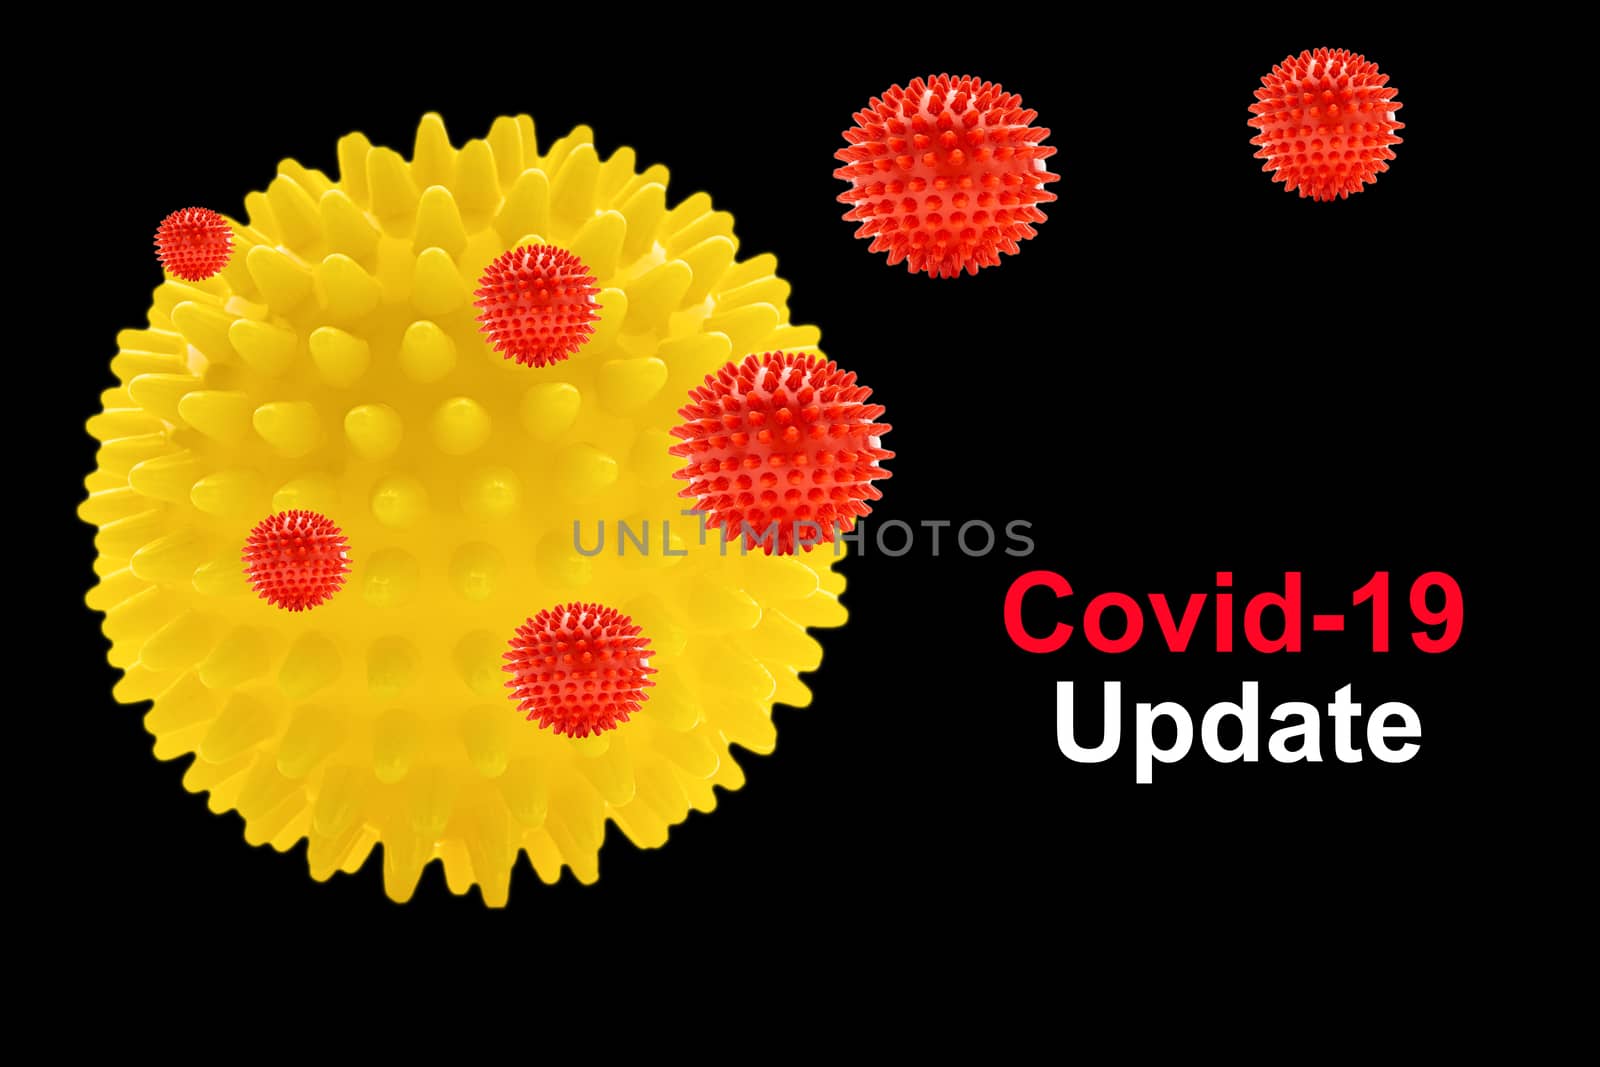 COVID-19 UPDATE text on black background. Covid-19 or Coronavirus